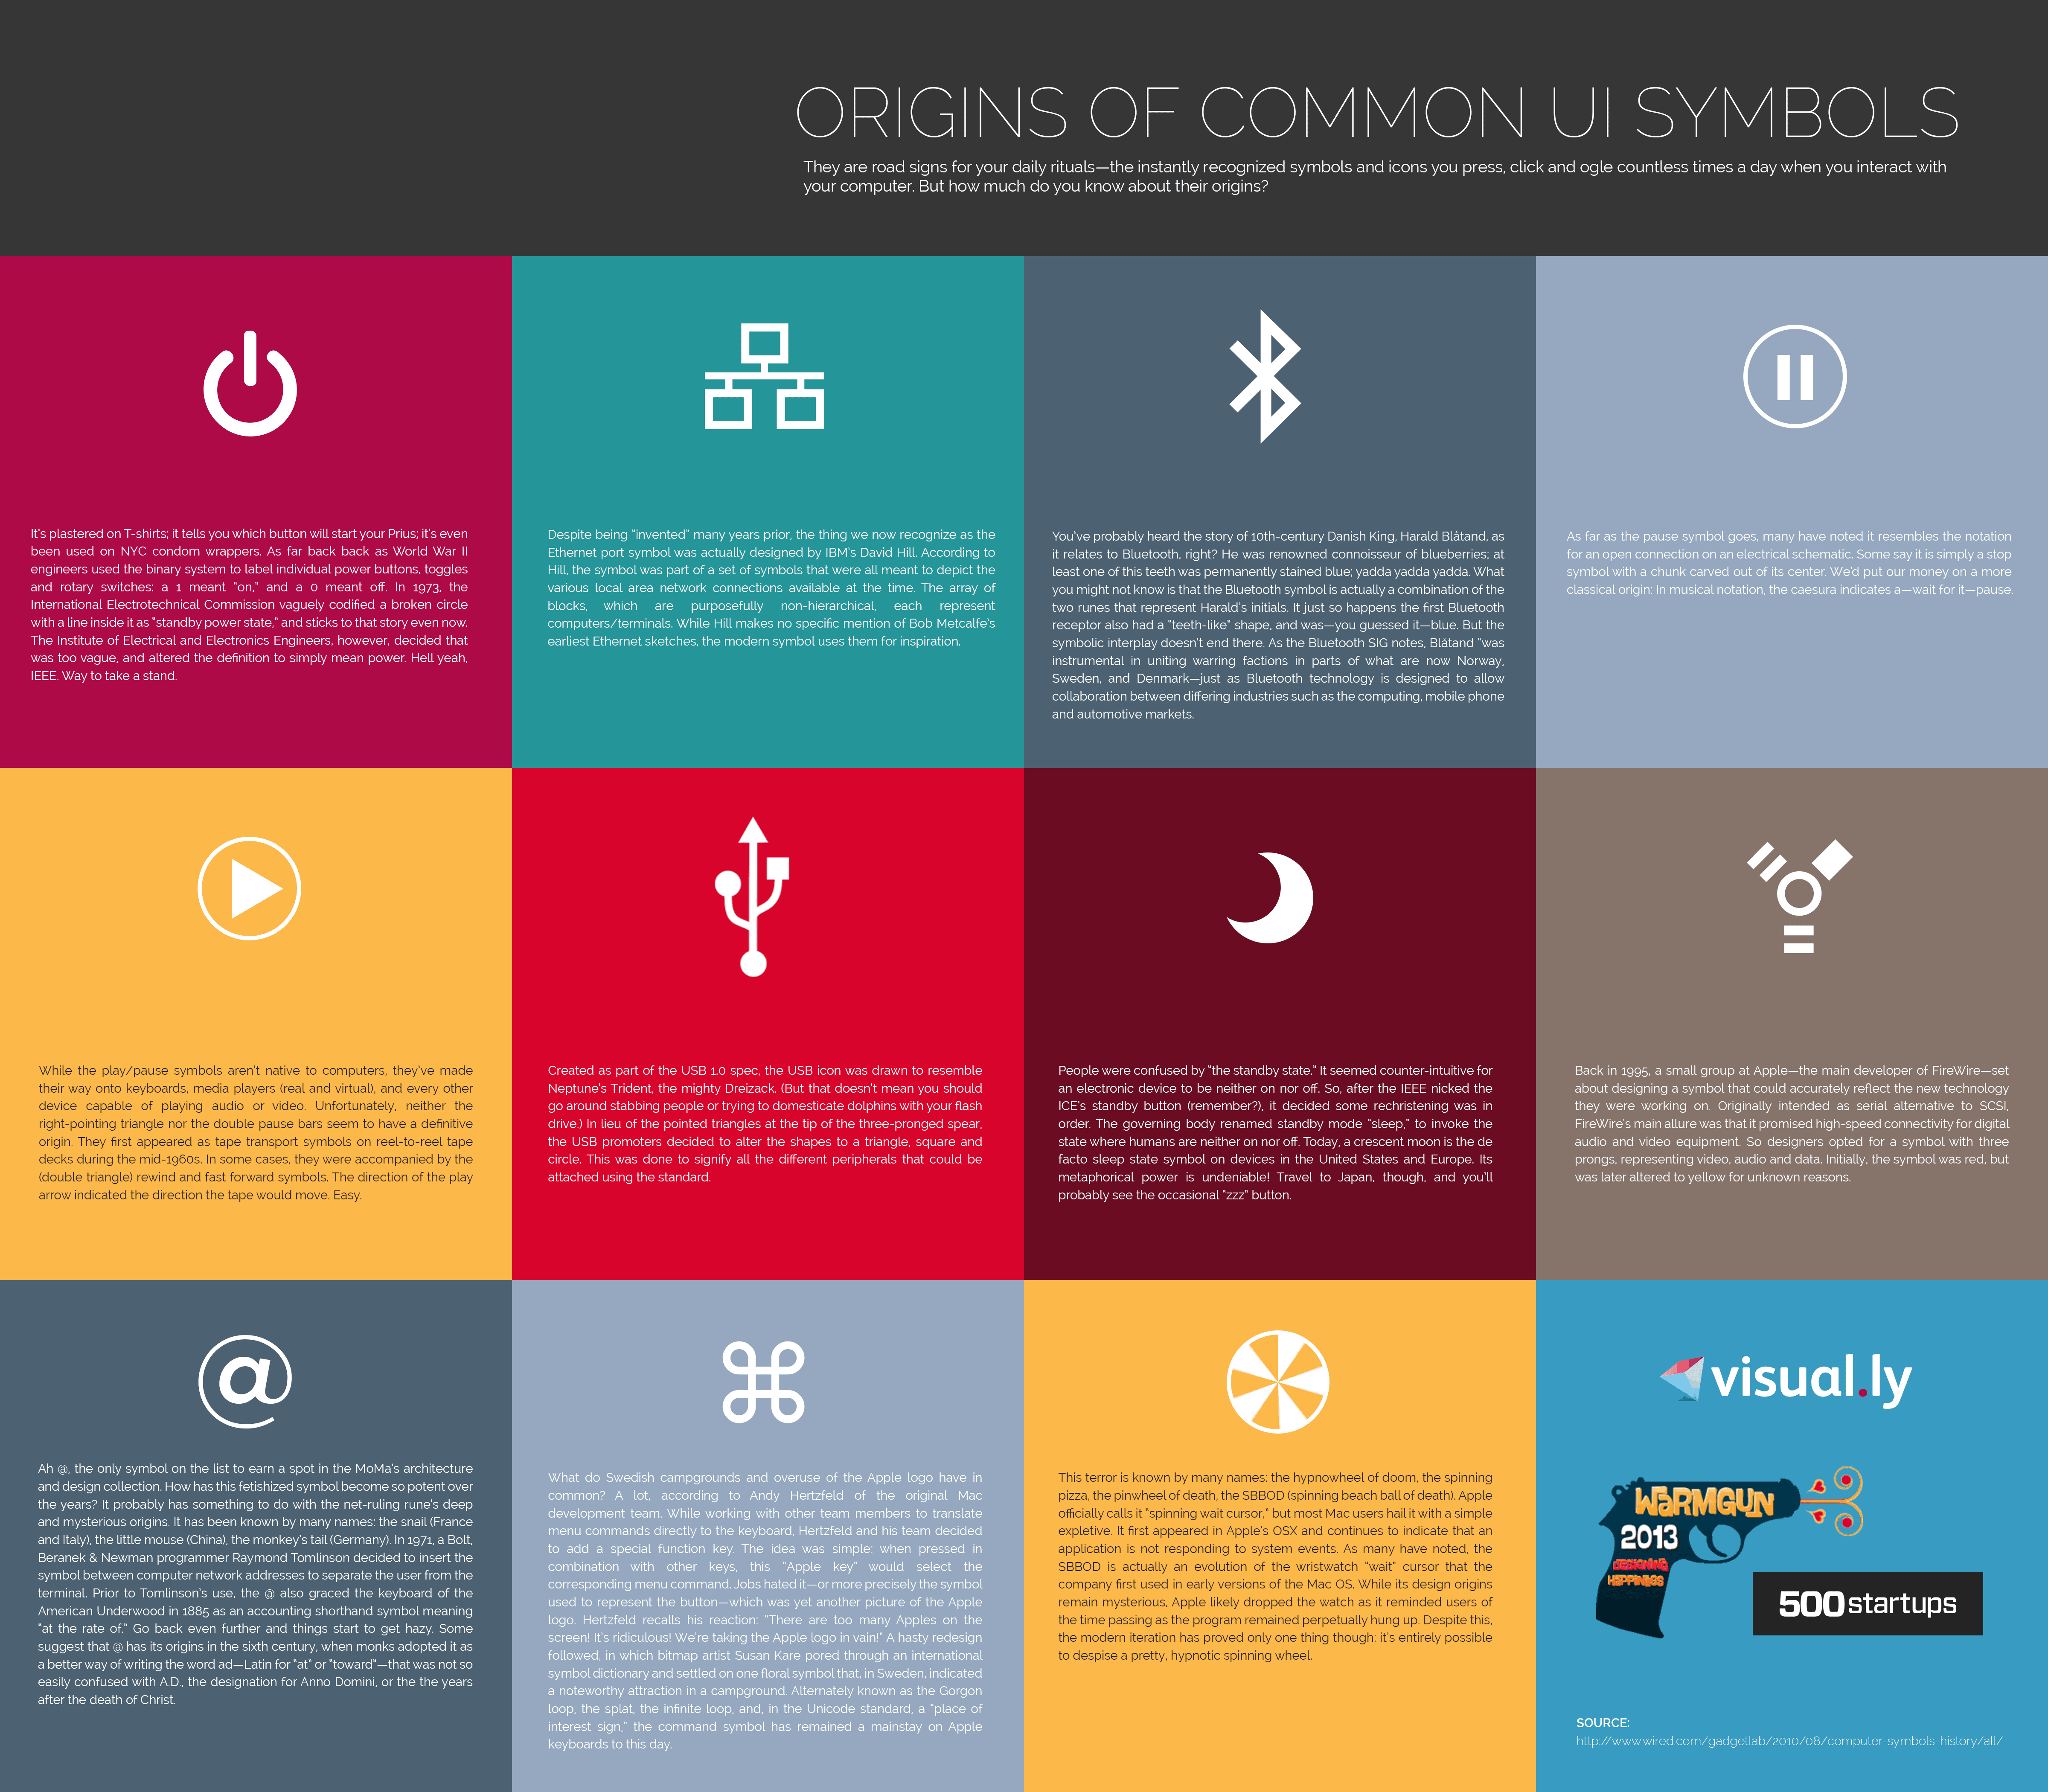 Origins of Common UI Symbols | Daily Infographic